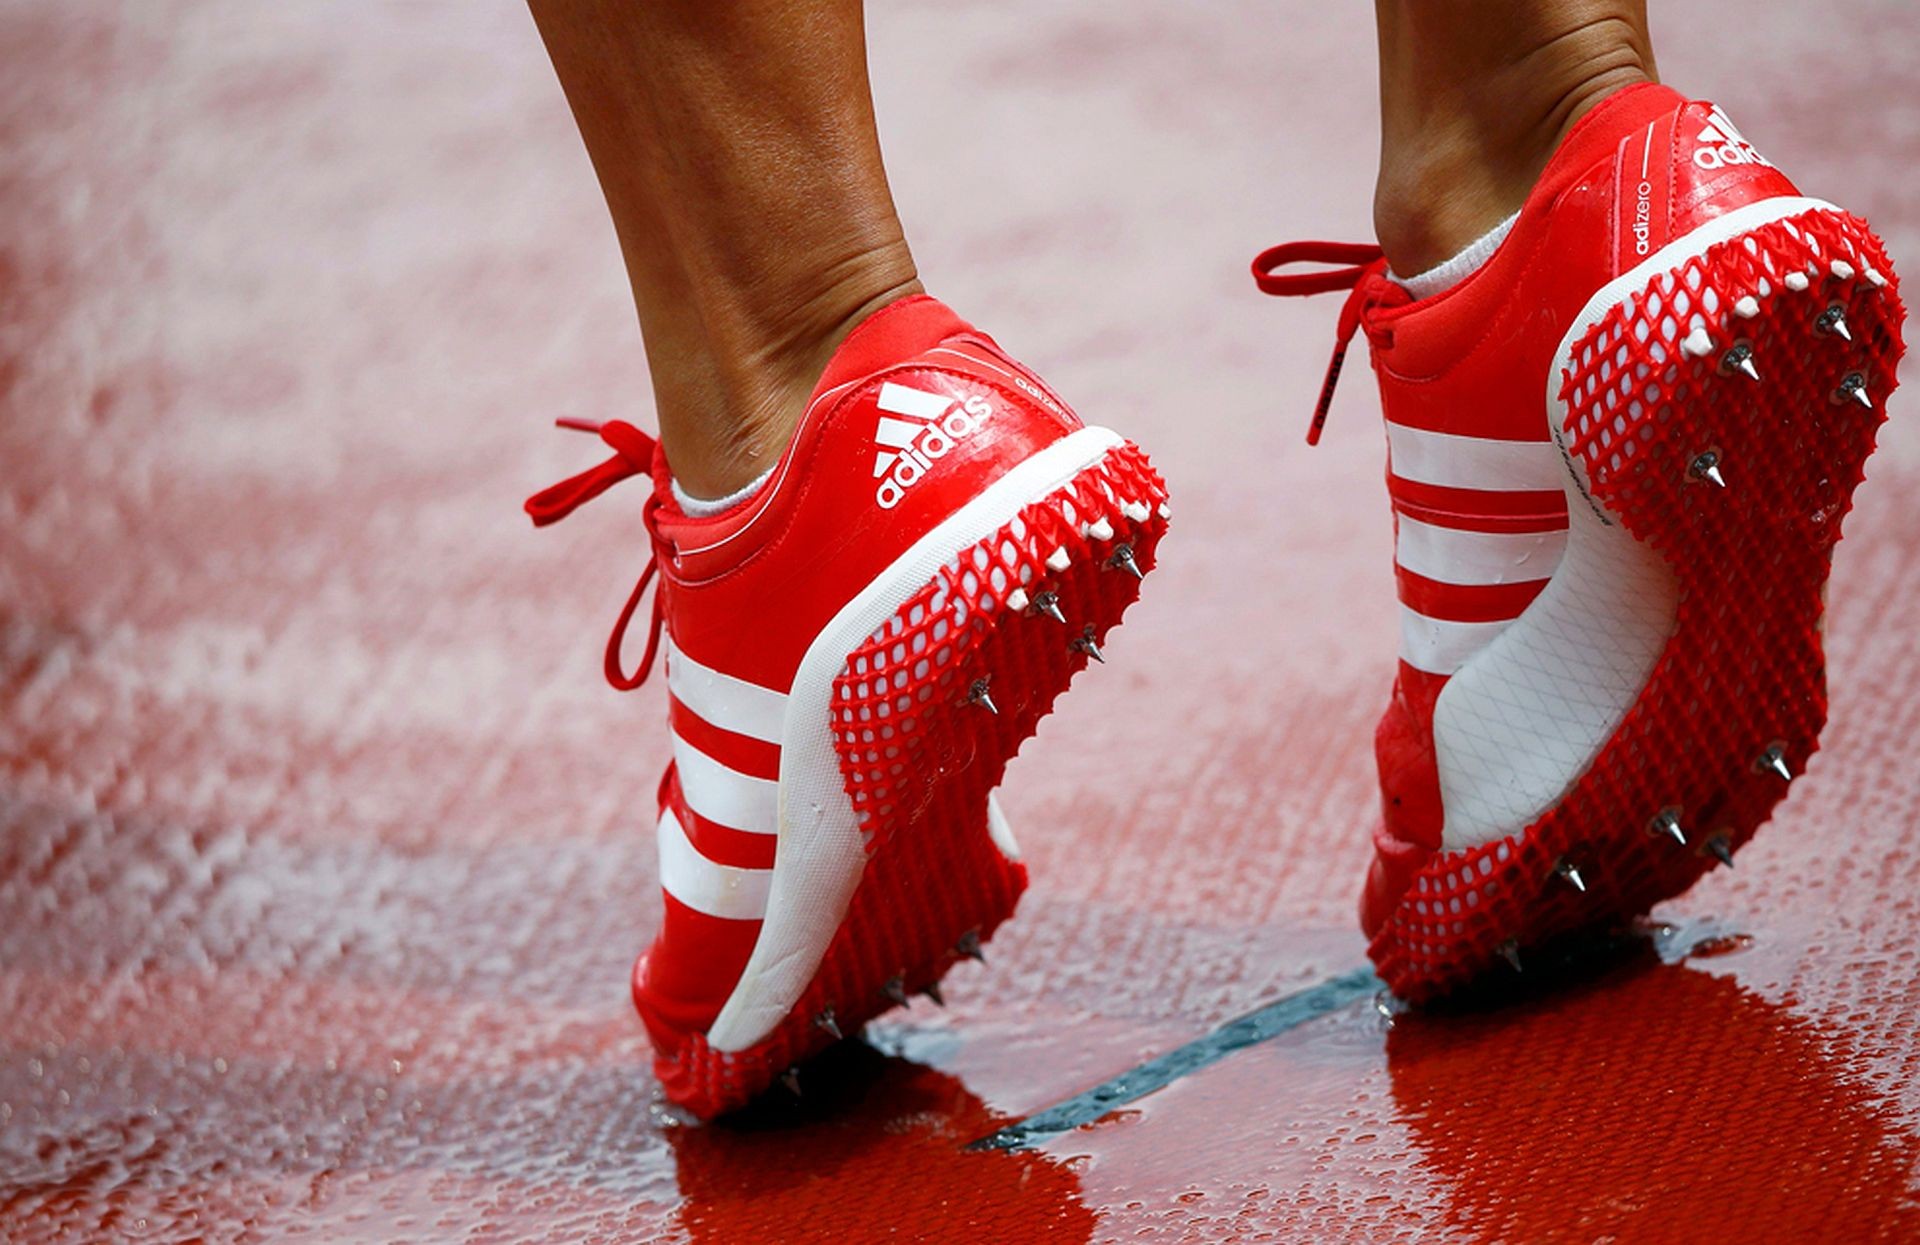 Olympic games 2014 обувь